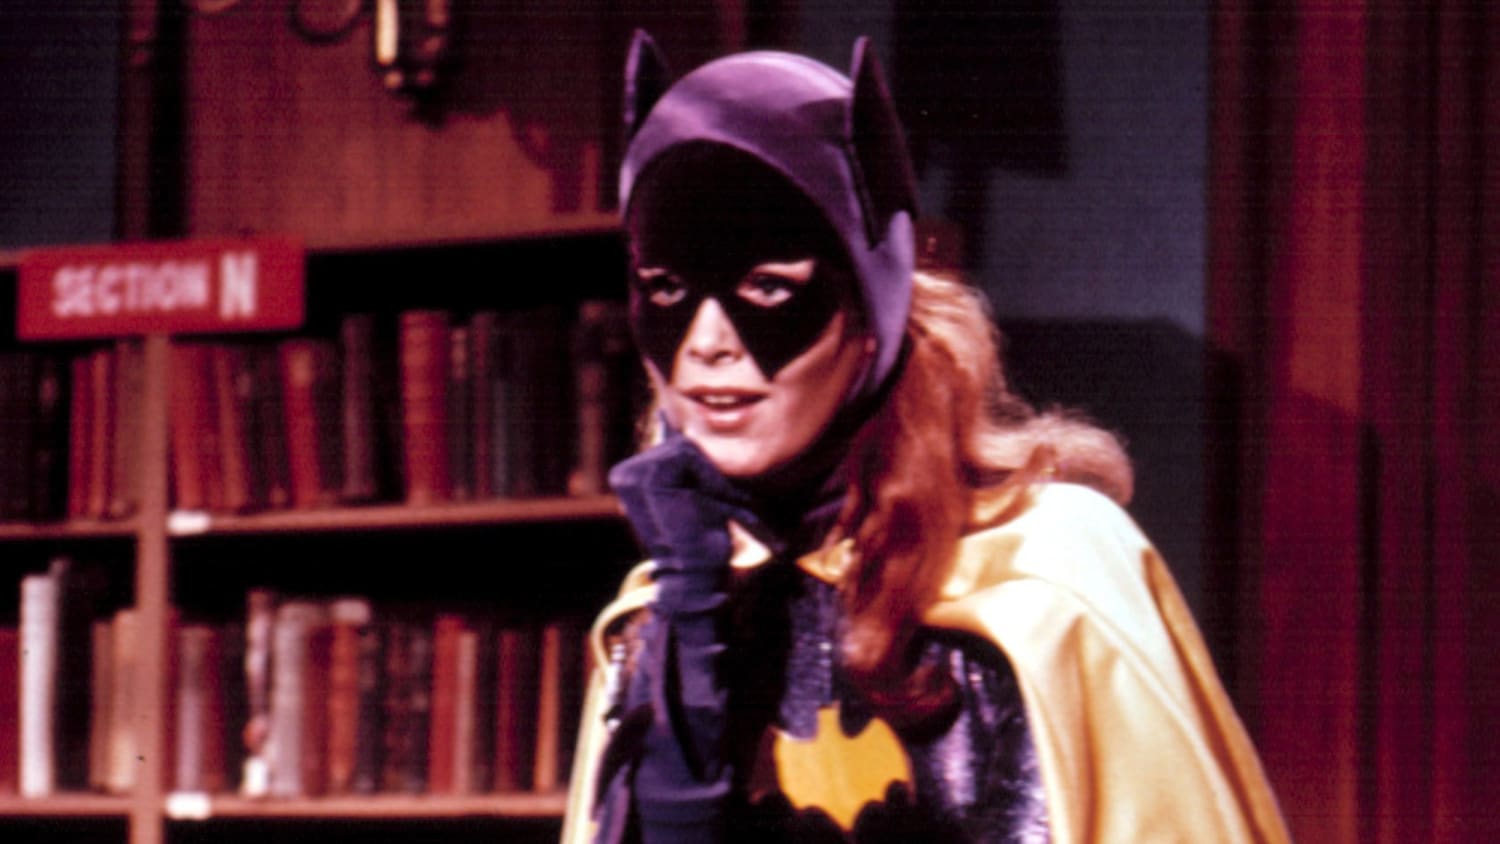 Yvonne Craig, the original ”Batgirl”, had a final wish before she died